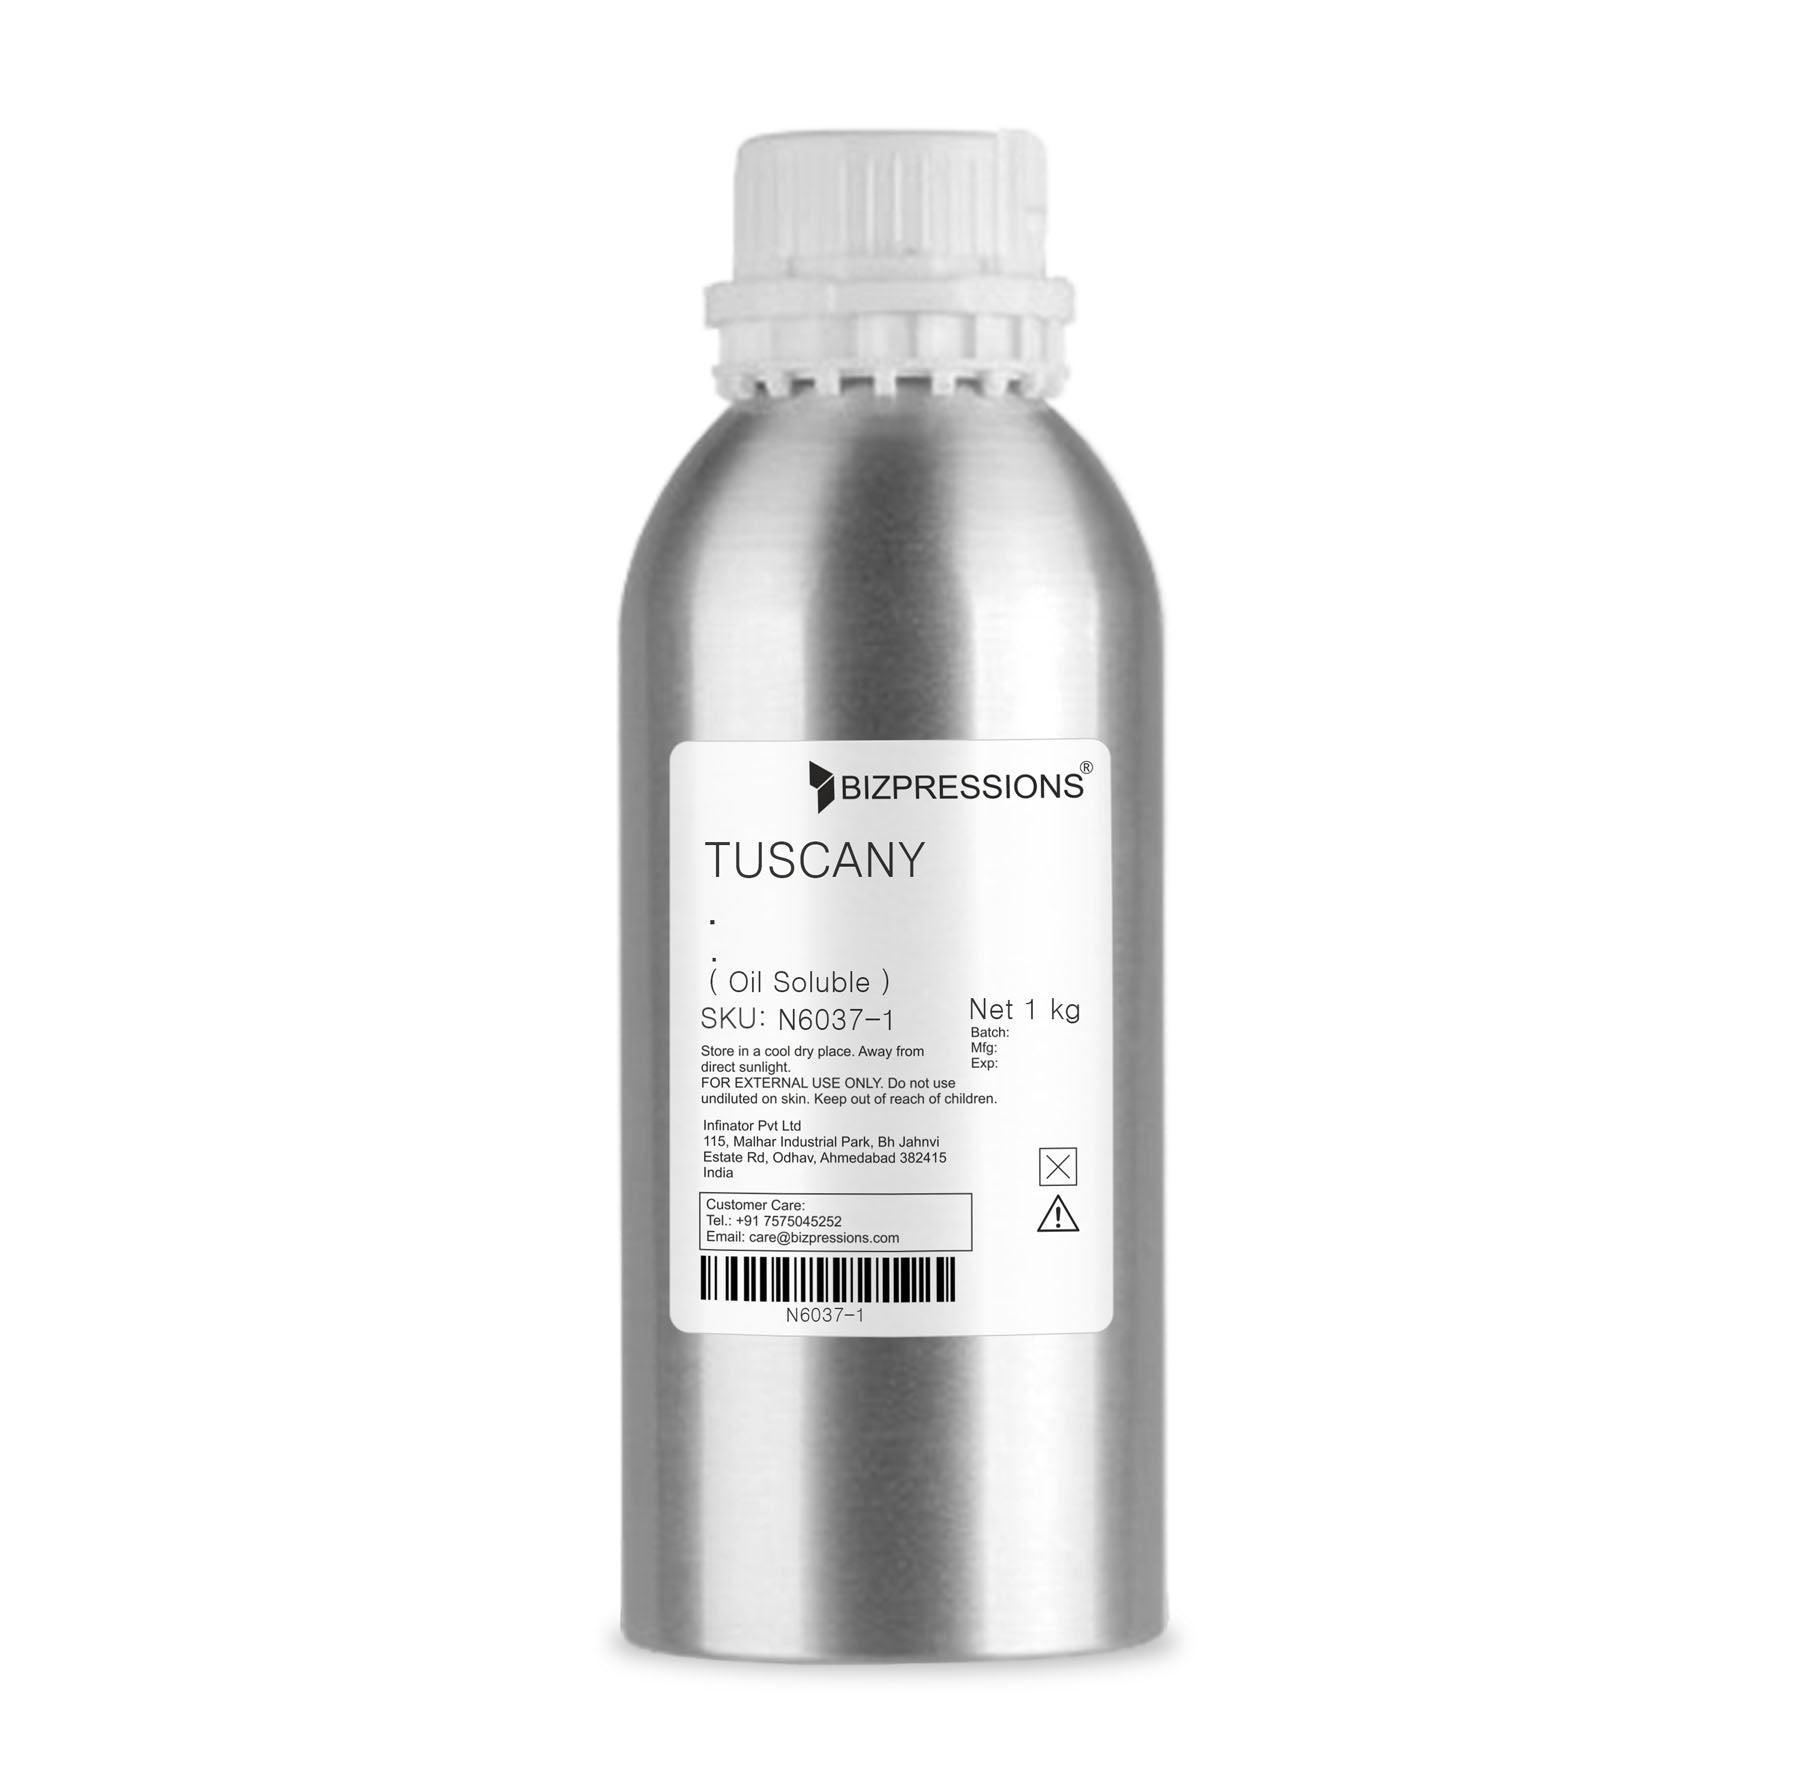 TUSCANY - Fragrance ( Oil Soluble ) - 1 kg